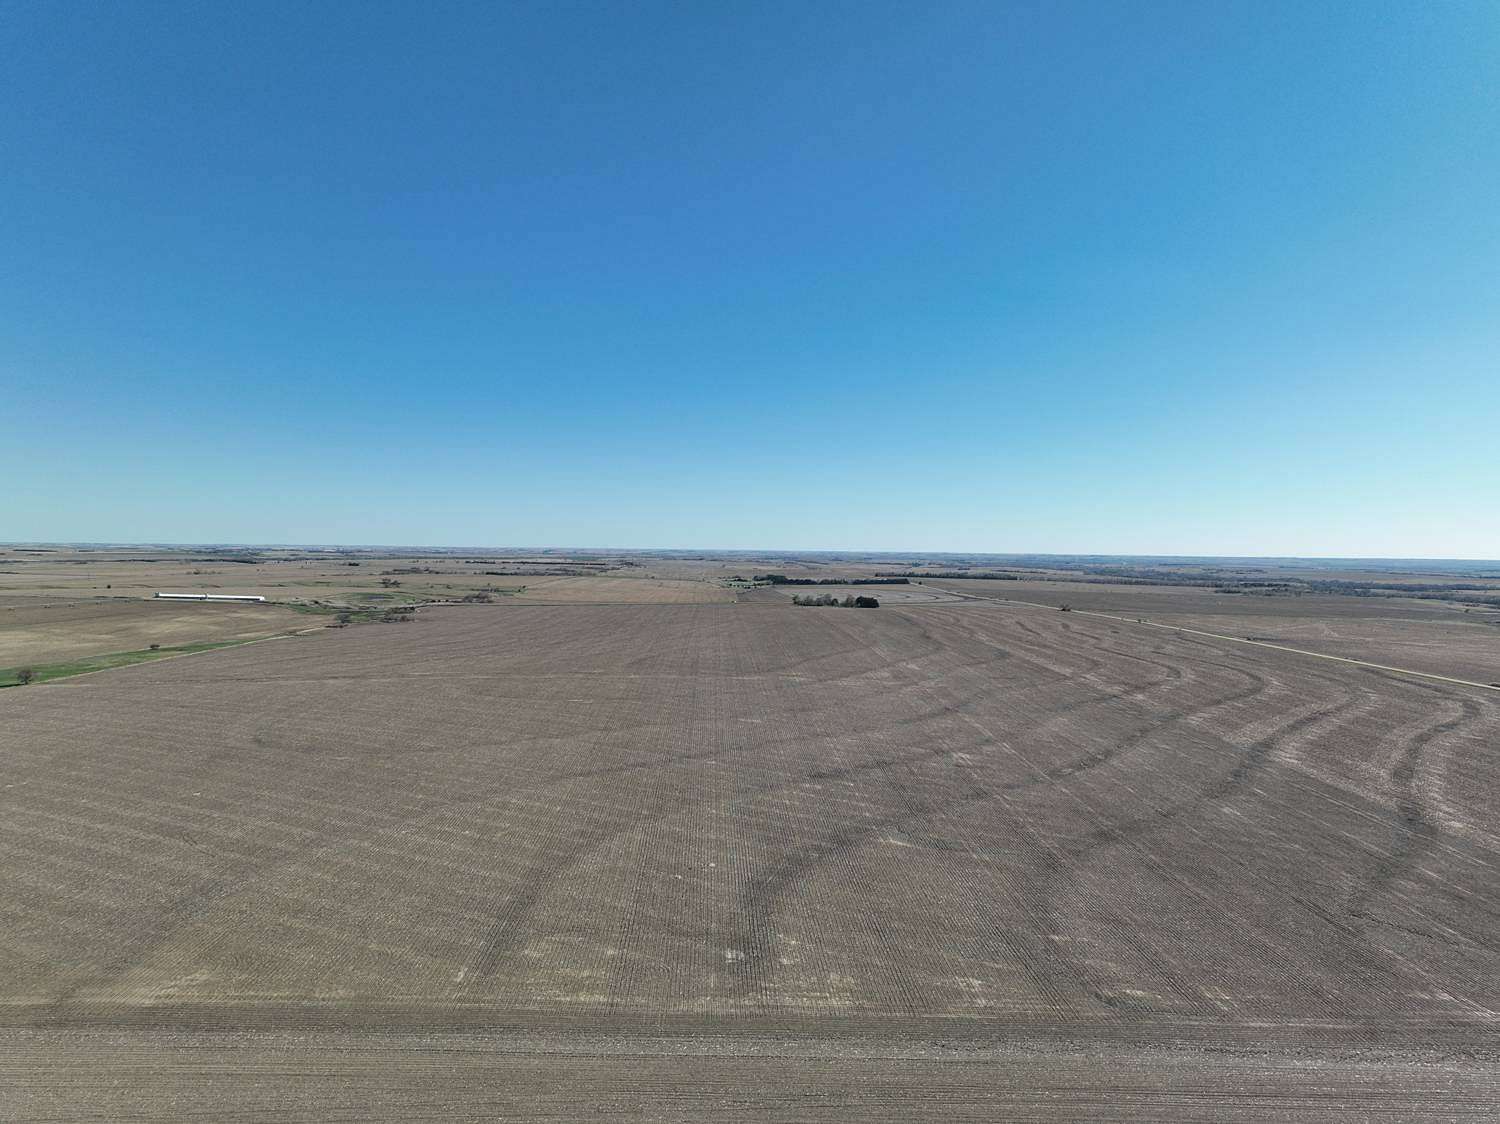 243 Acres of Agricultural Land for Auction in Oxford, Nebraska